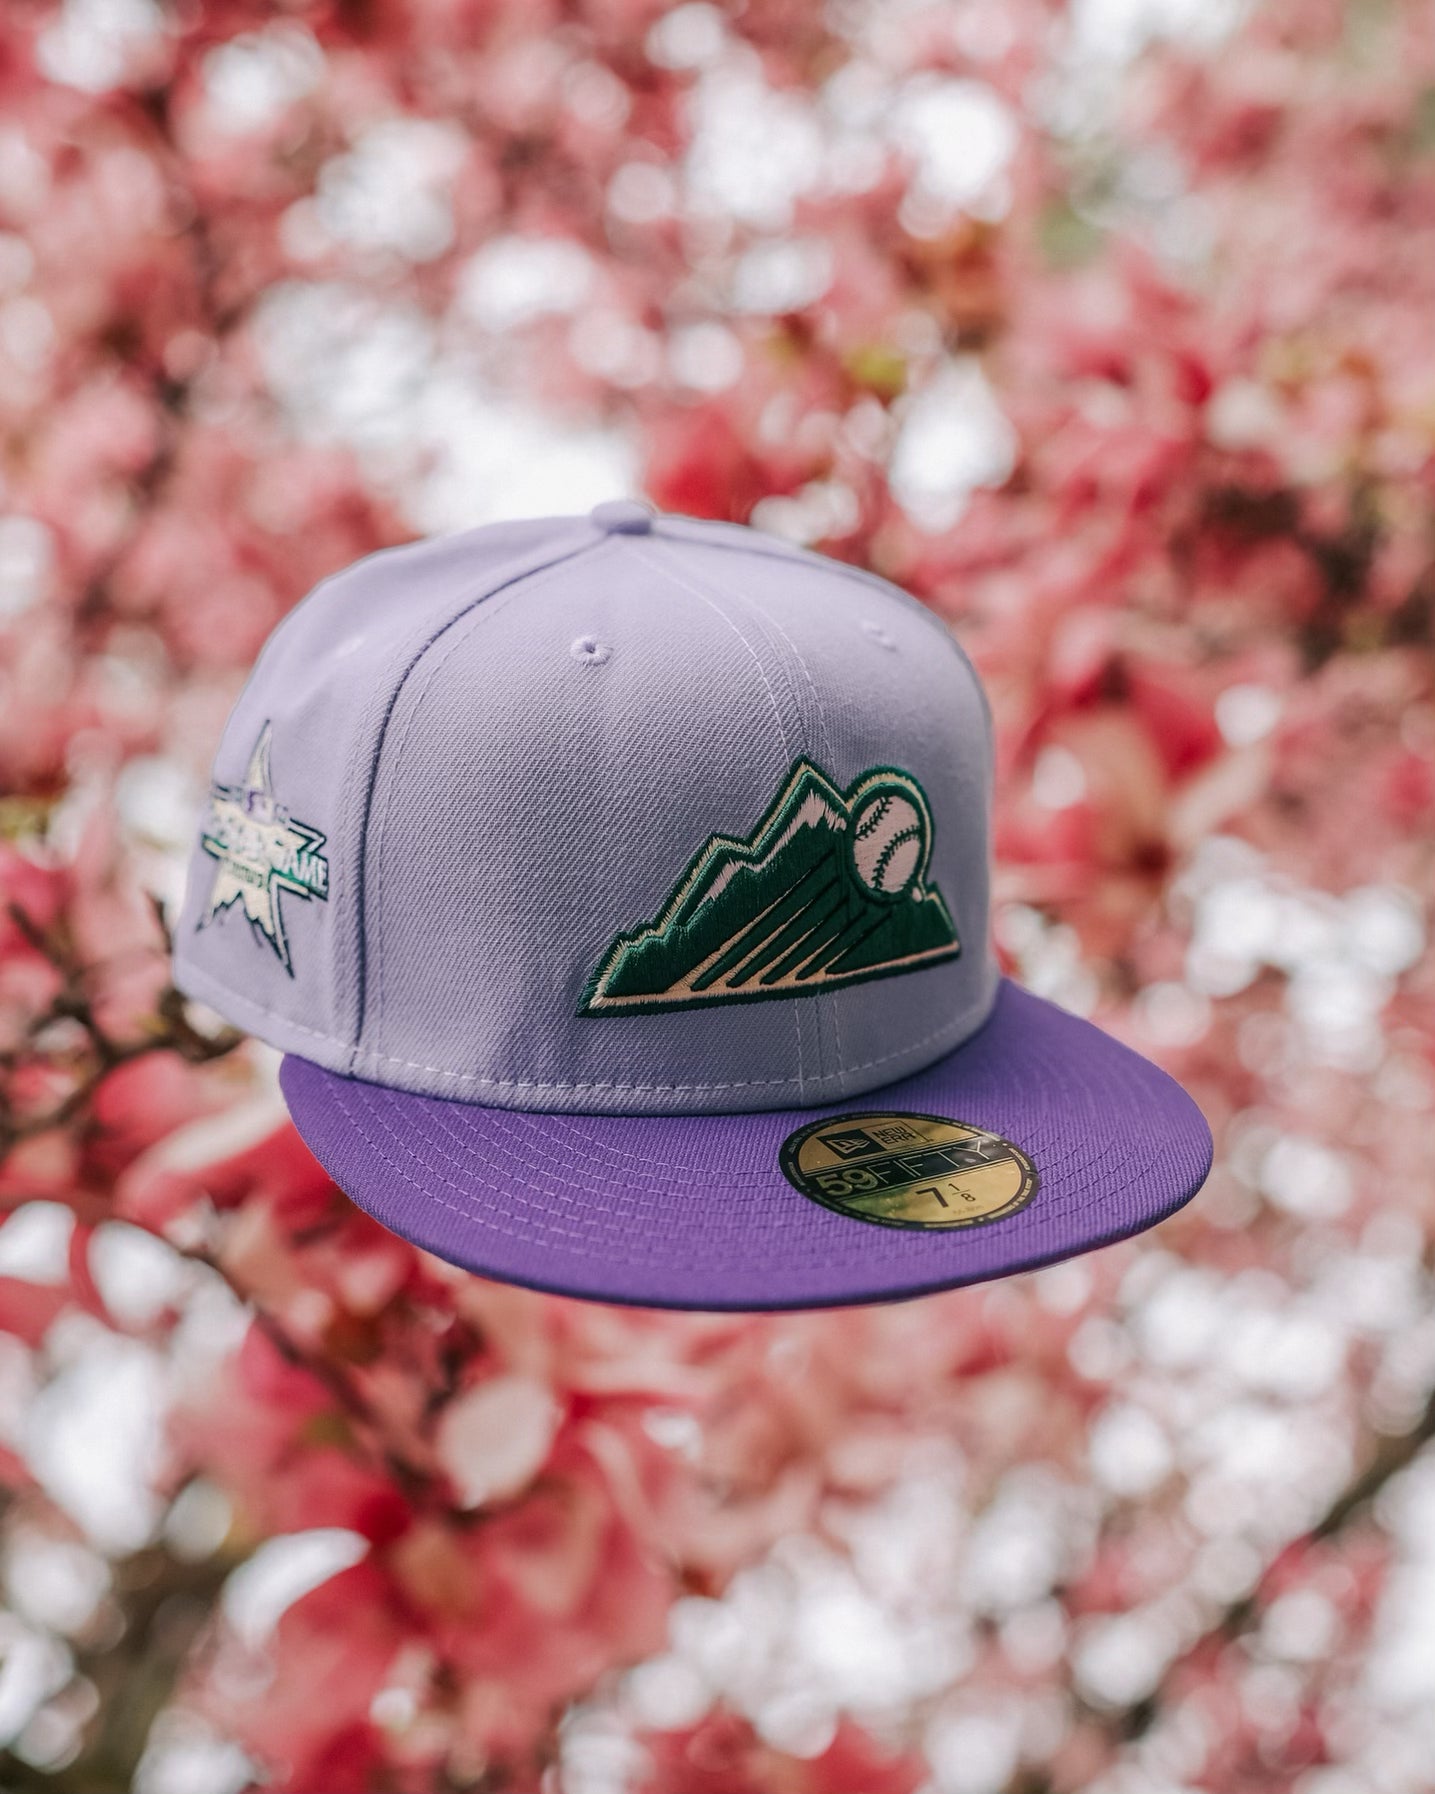 purple rockies hat